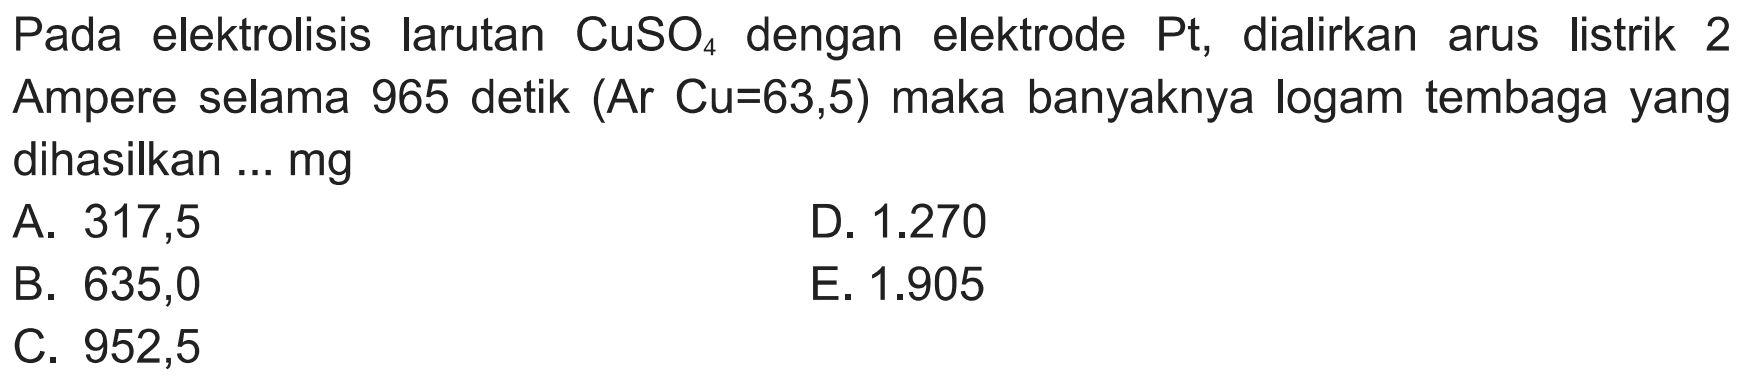 Pada elektrolisis larutan CuSO4 dengan elektrode Pt , dialirkan arus listrik 2 Ampere selama 965 detik (Ar Cu=63,5) maka banyaknya logam tembaga yang dihasilkan ... mg